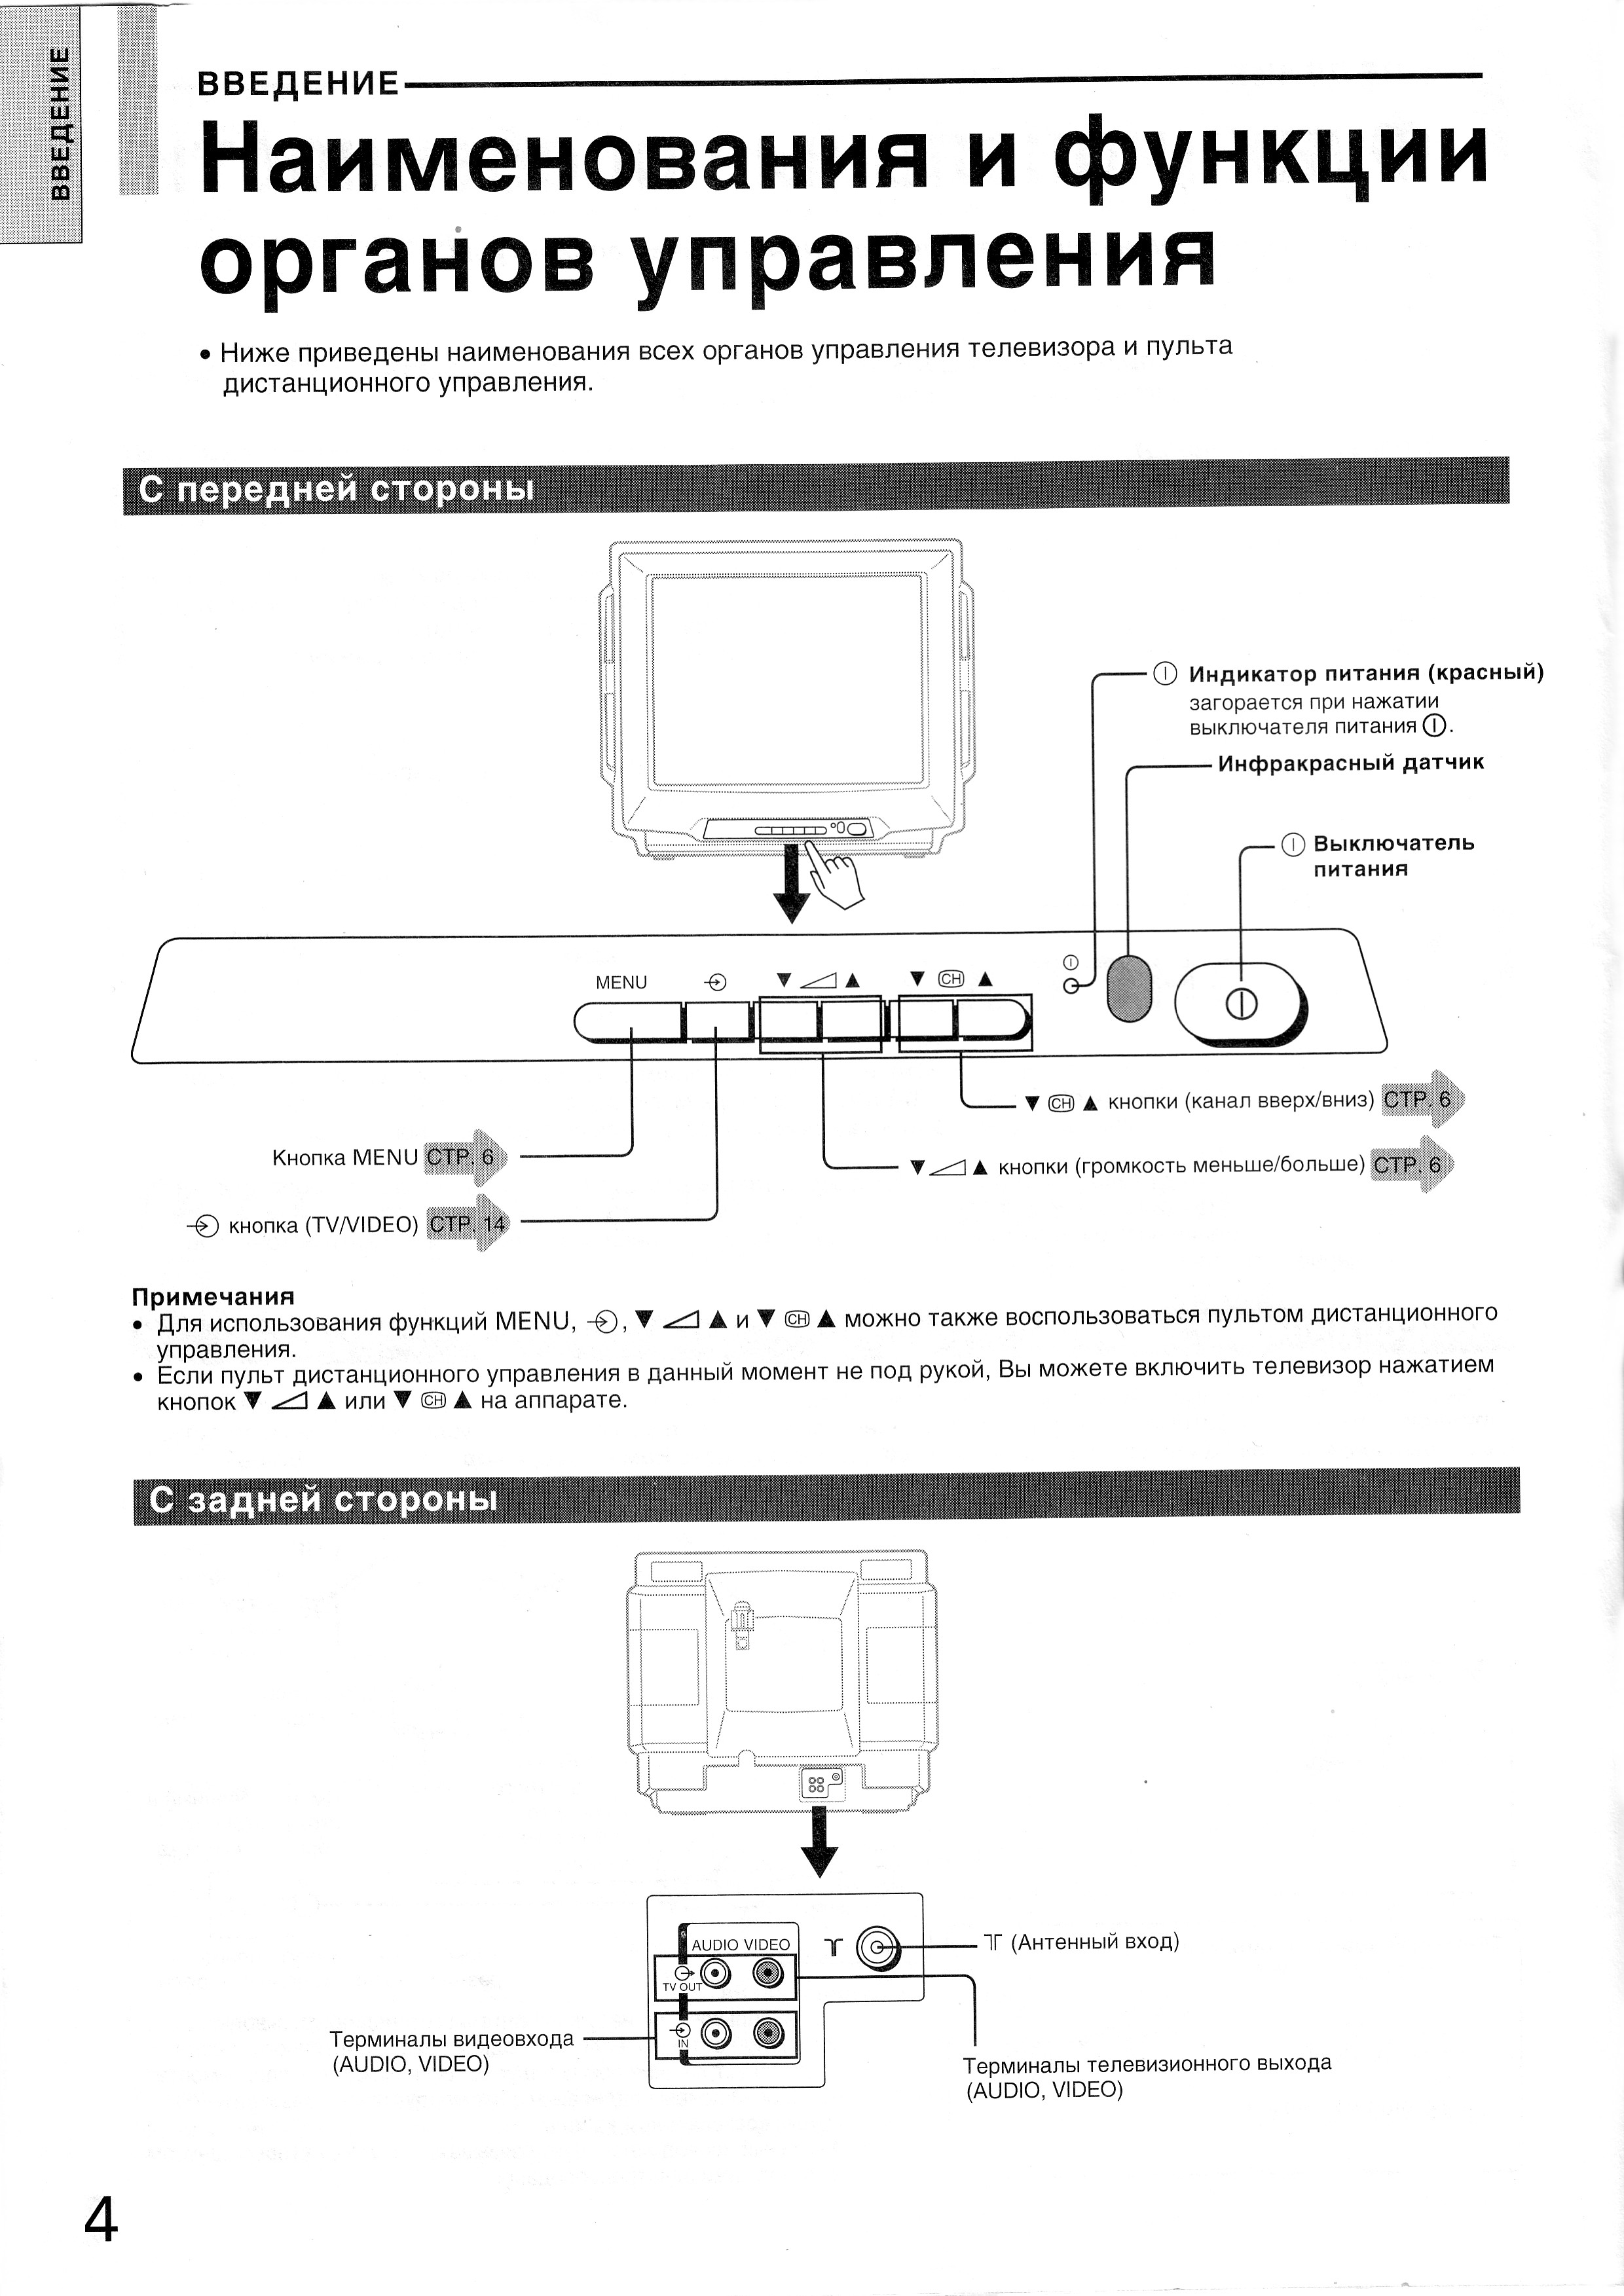 Инструкция к телевизору toshiba 2150xs3